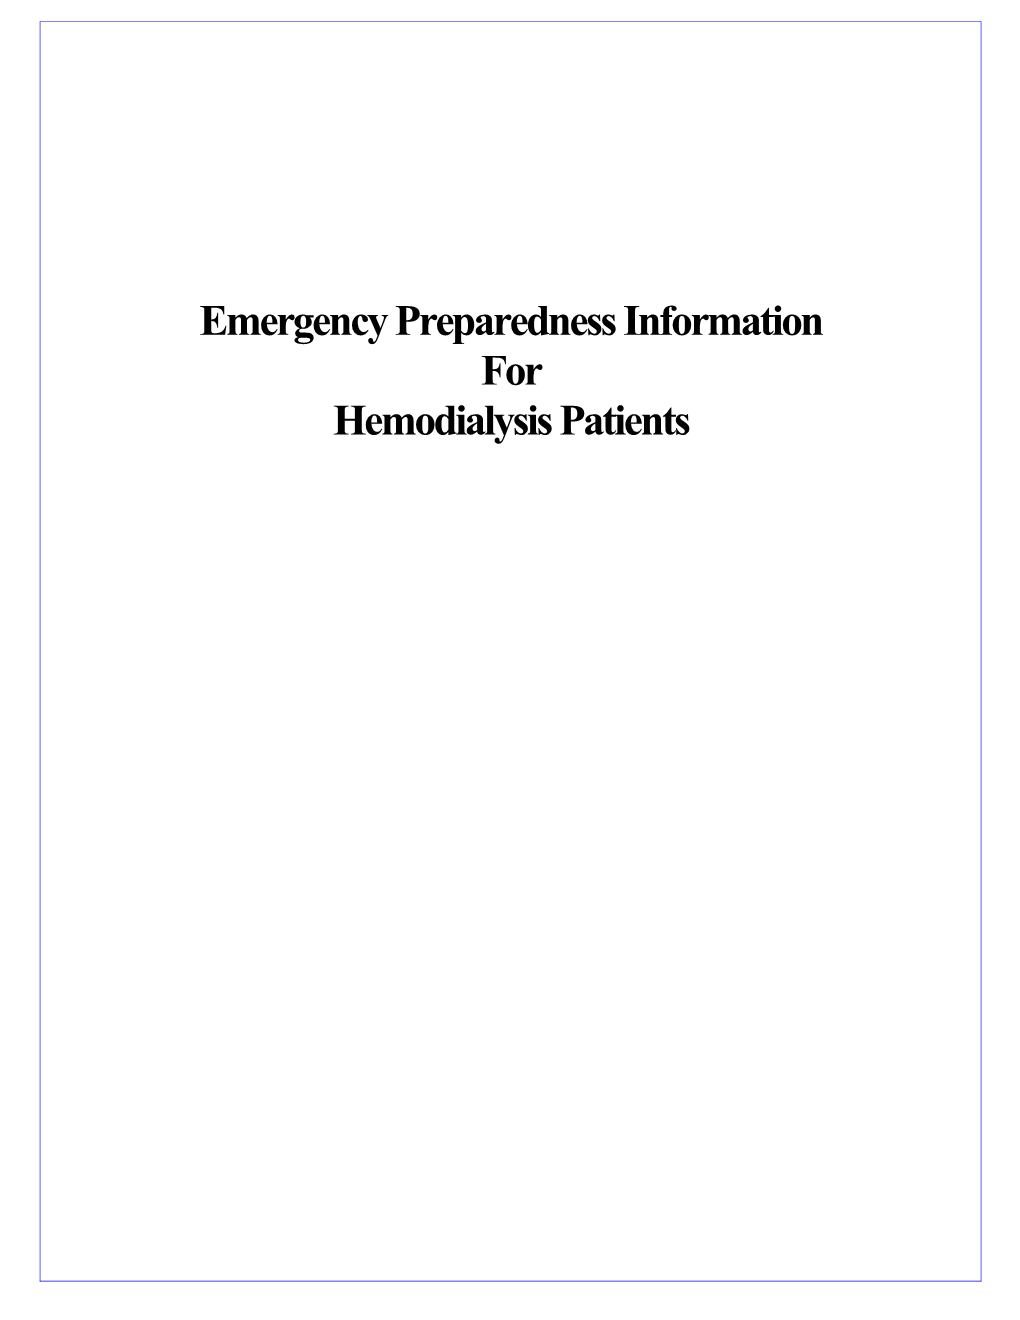 Emergency Preparedness Information for Hemodialysis Patients - Template